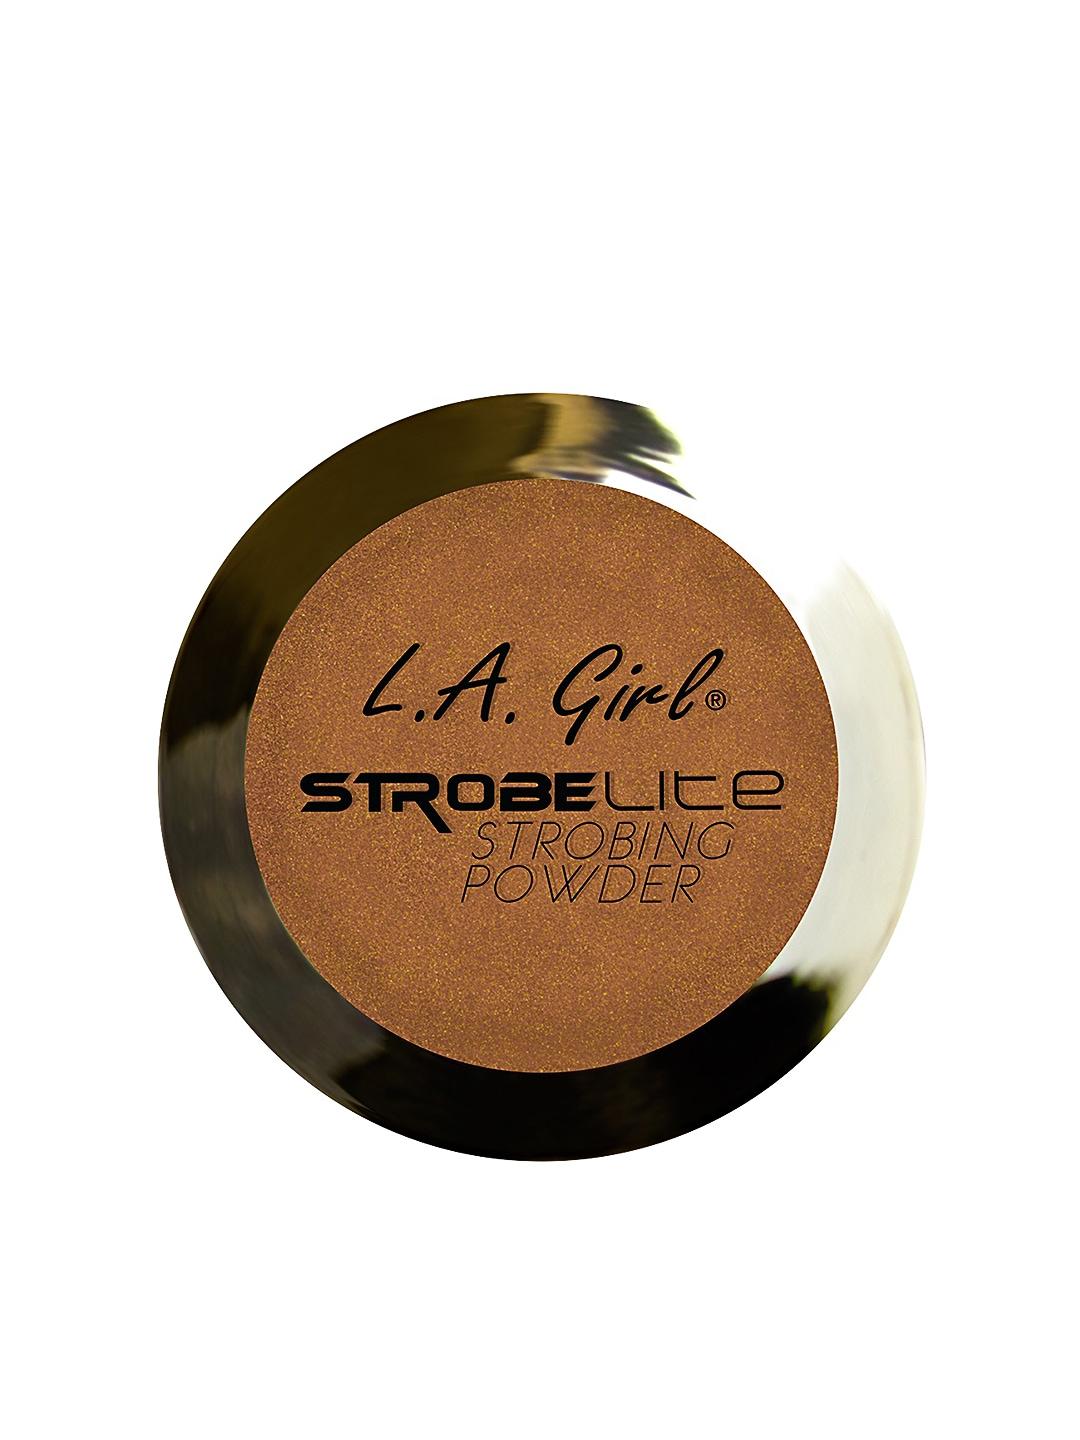 l.-a-girl-20-watt-strobe-lite-strobing-powder-gsp631